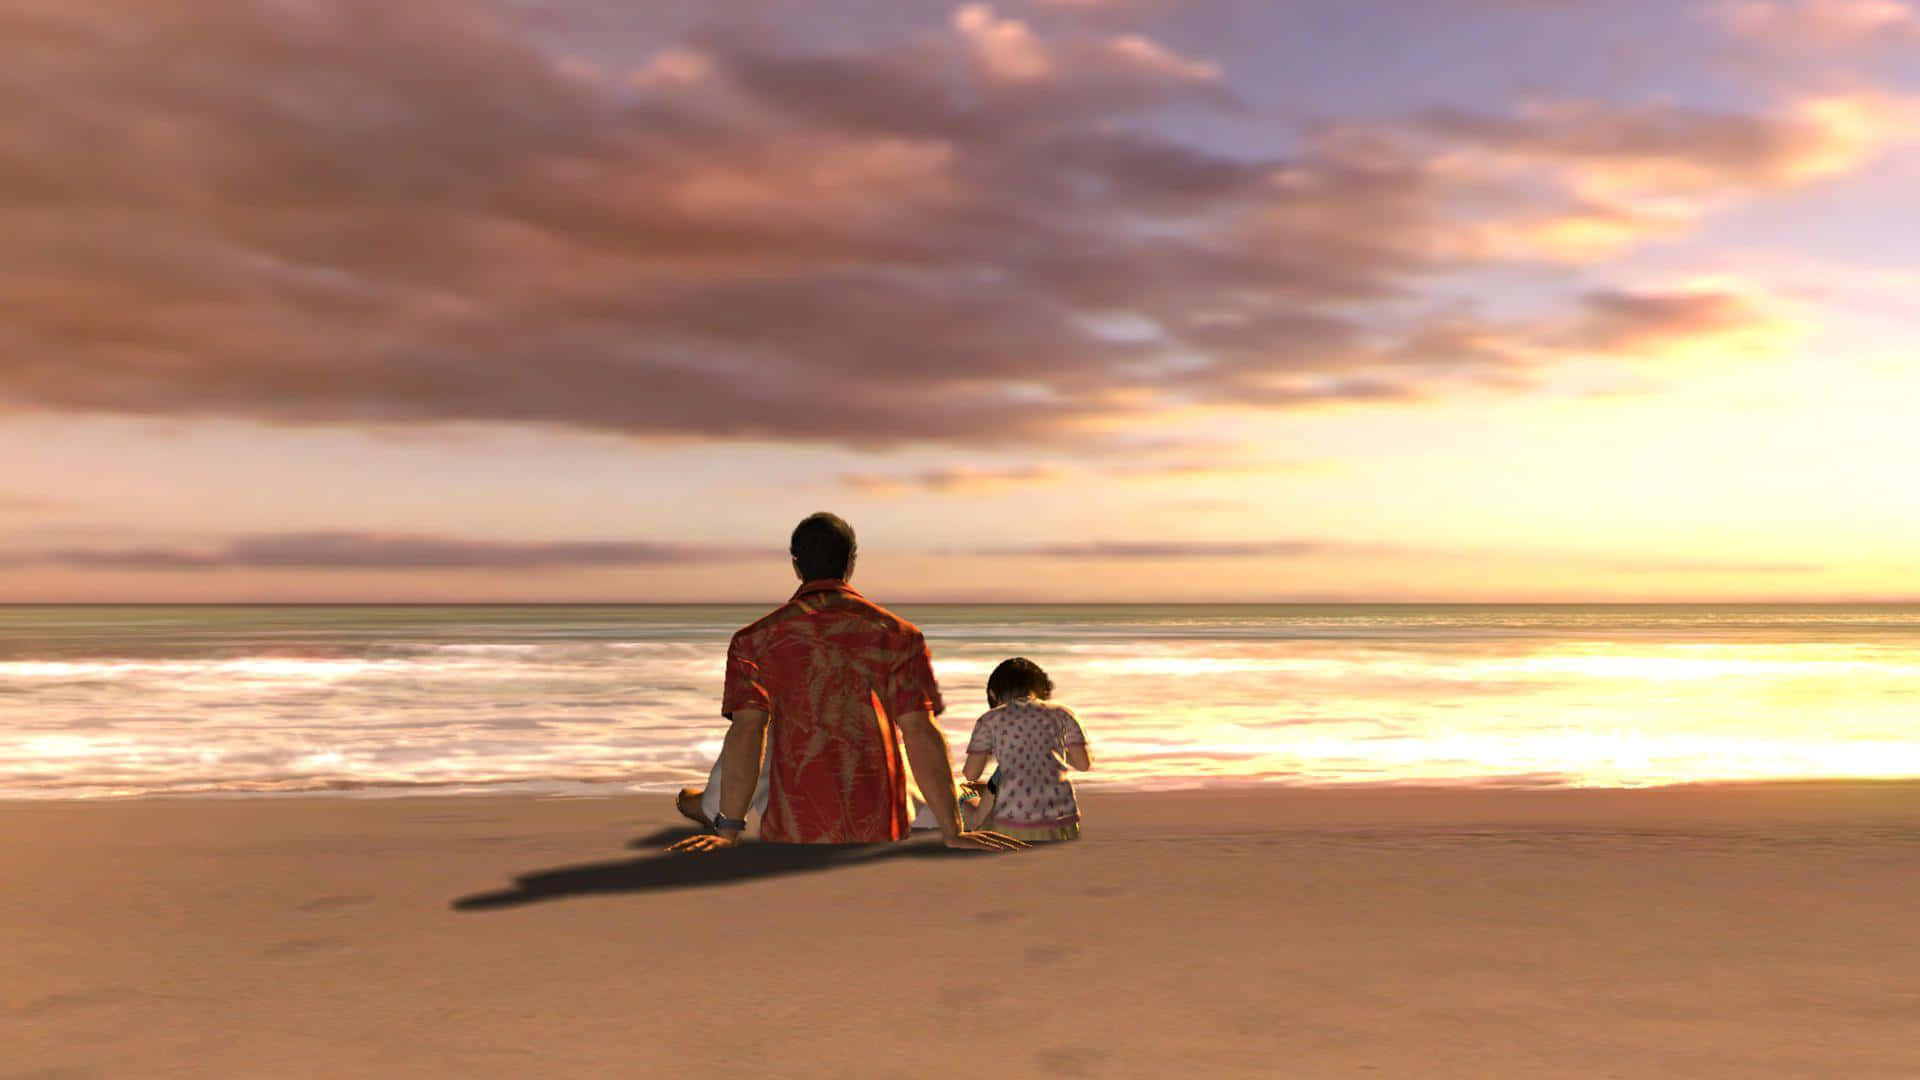 Far og datter ved stranden ser solnedgang billede